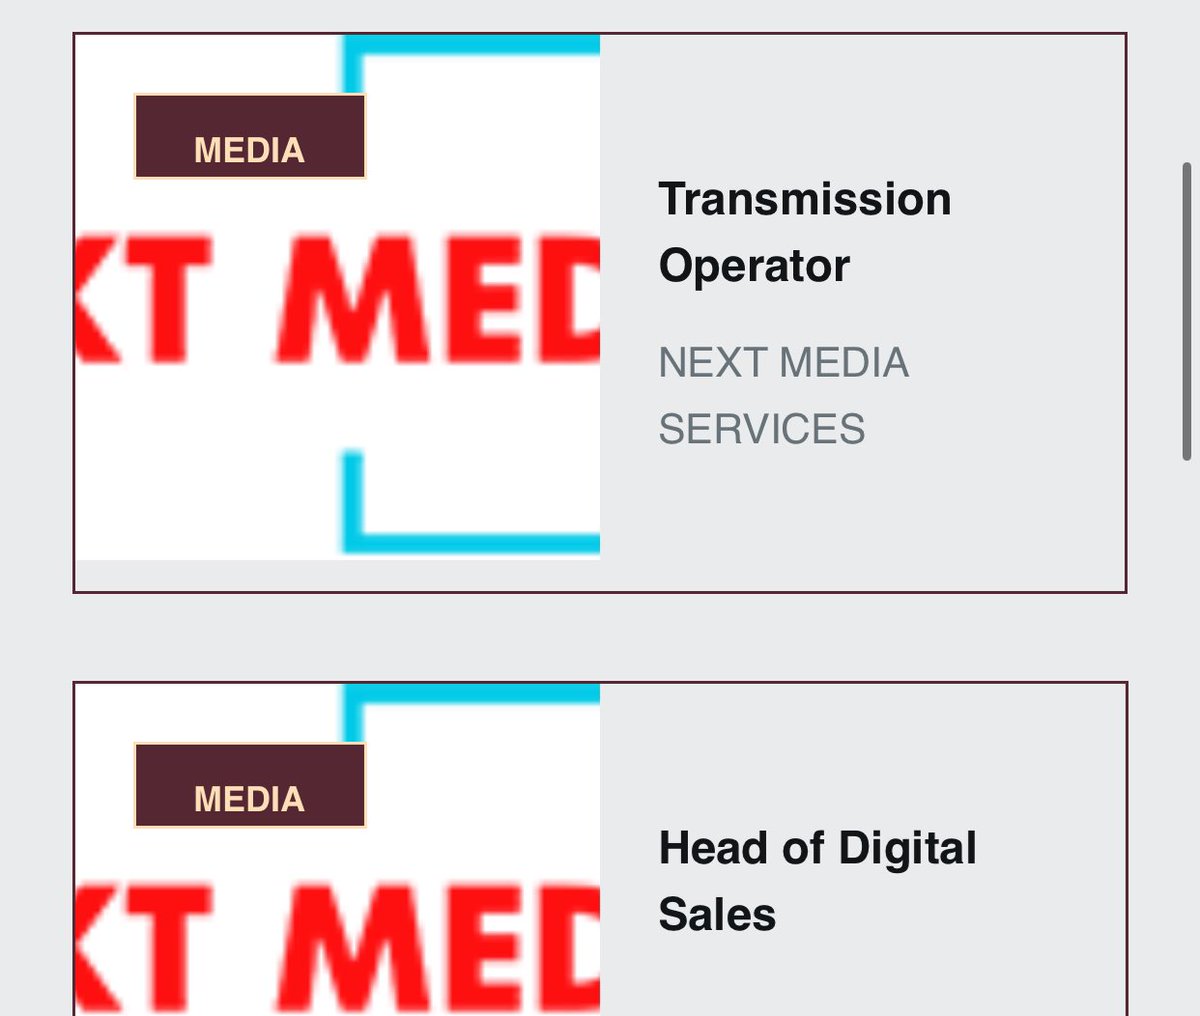 Next Media Uganda is hiring! - Head of Digital Sales: jobnotices.ug/job/head-of-di… - Transmission Operator: jobnotices.ug/job/transmissi…